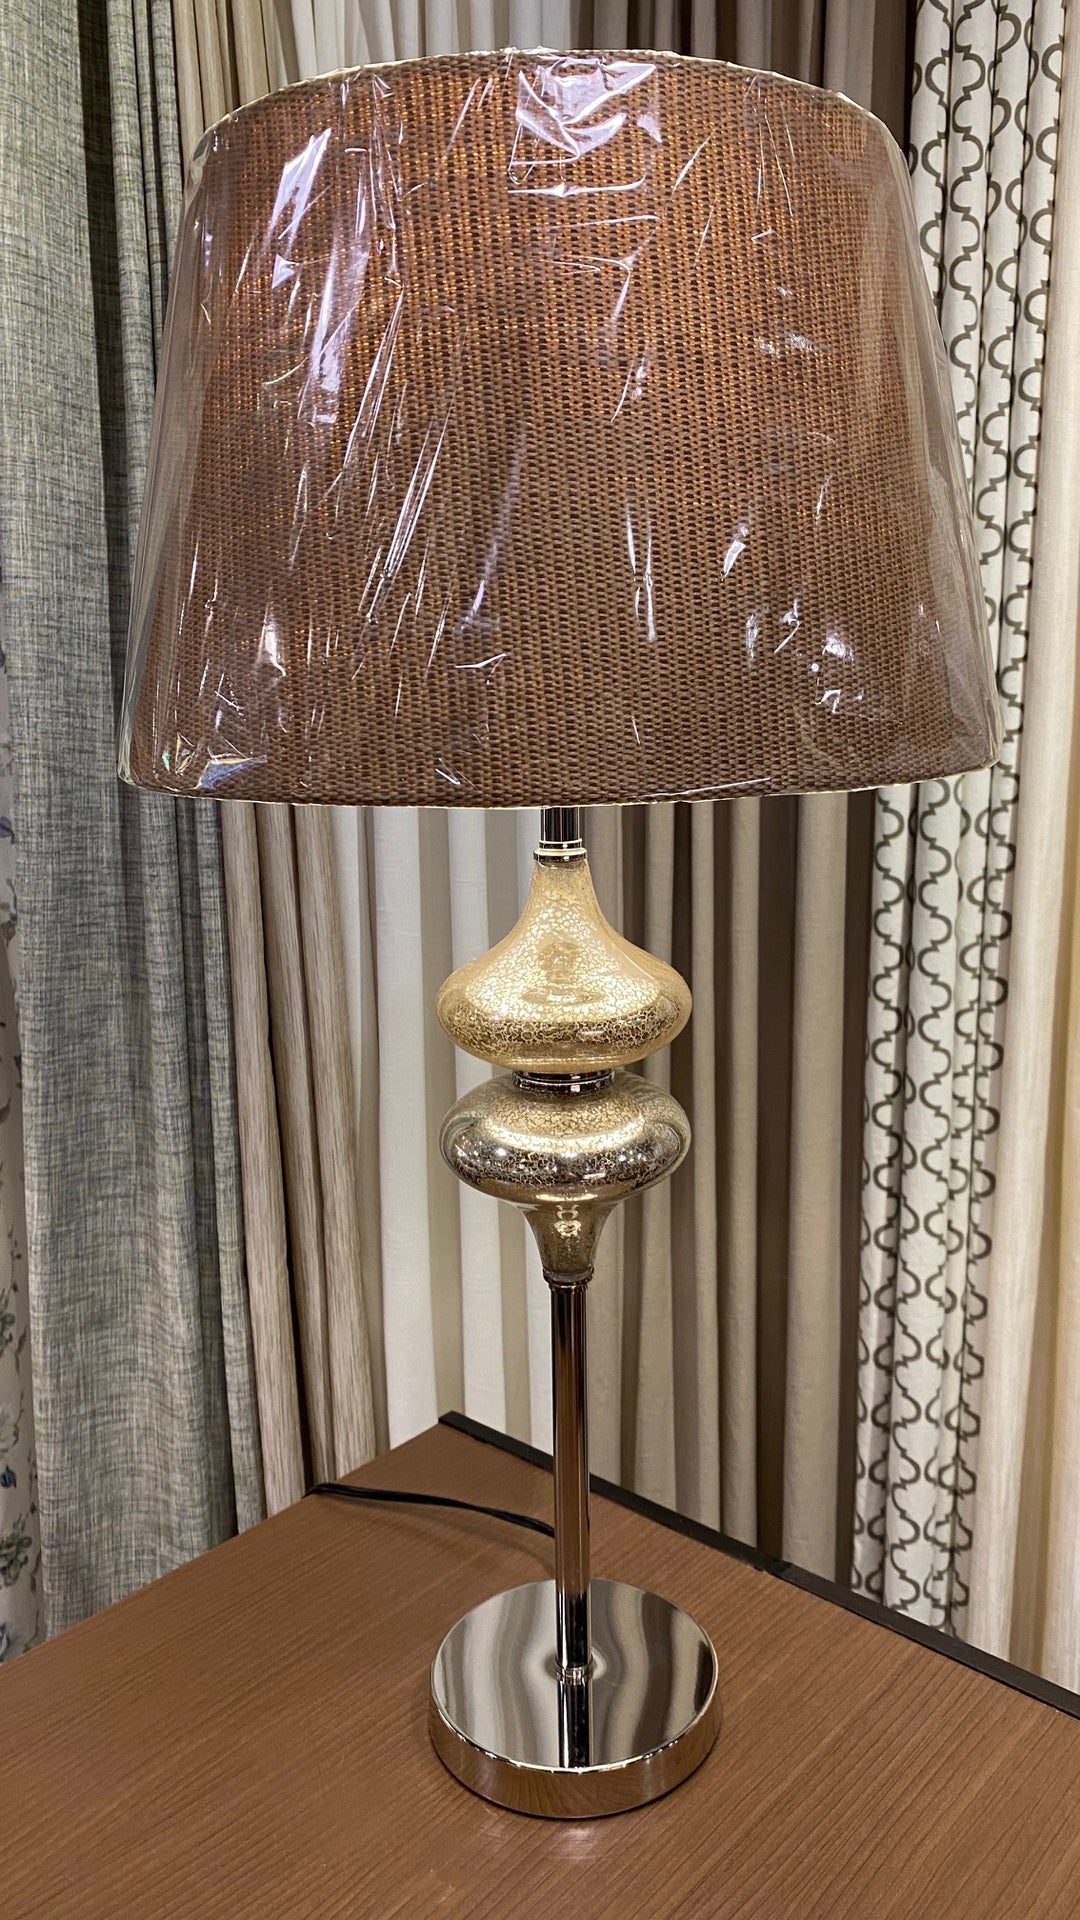 GLASS TEAR DROP TABLE LAMP - Kate & Co. Home